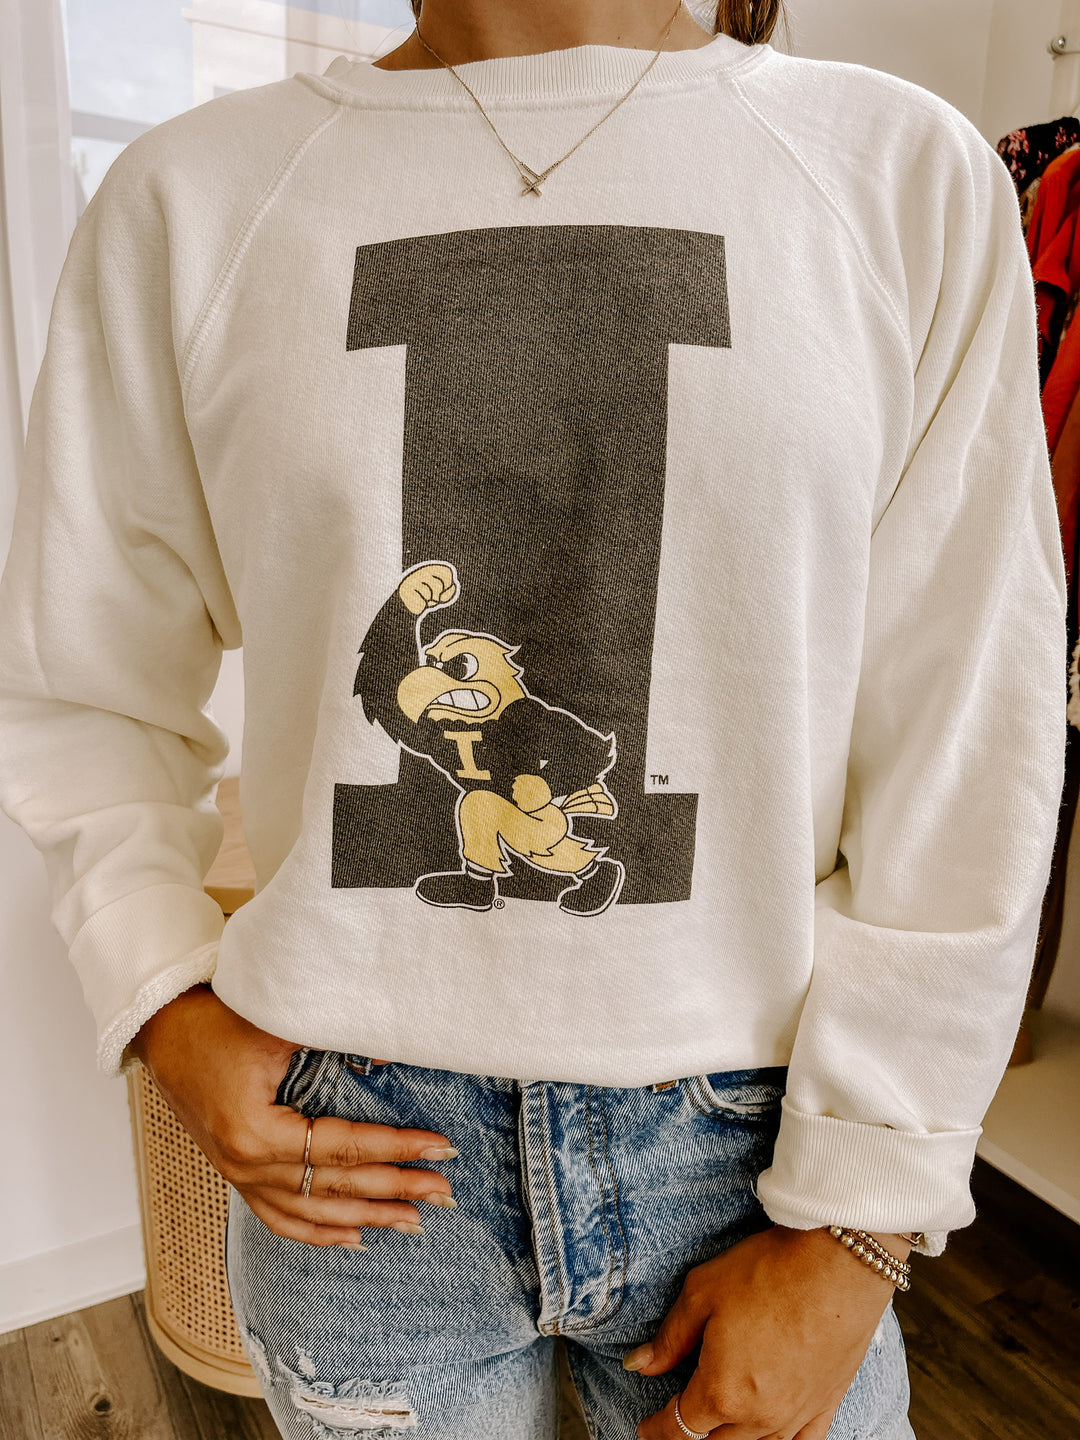 Retro Sport - University of Iowa 'I' Sweatshirt in Antique White